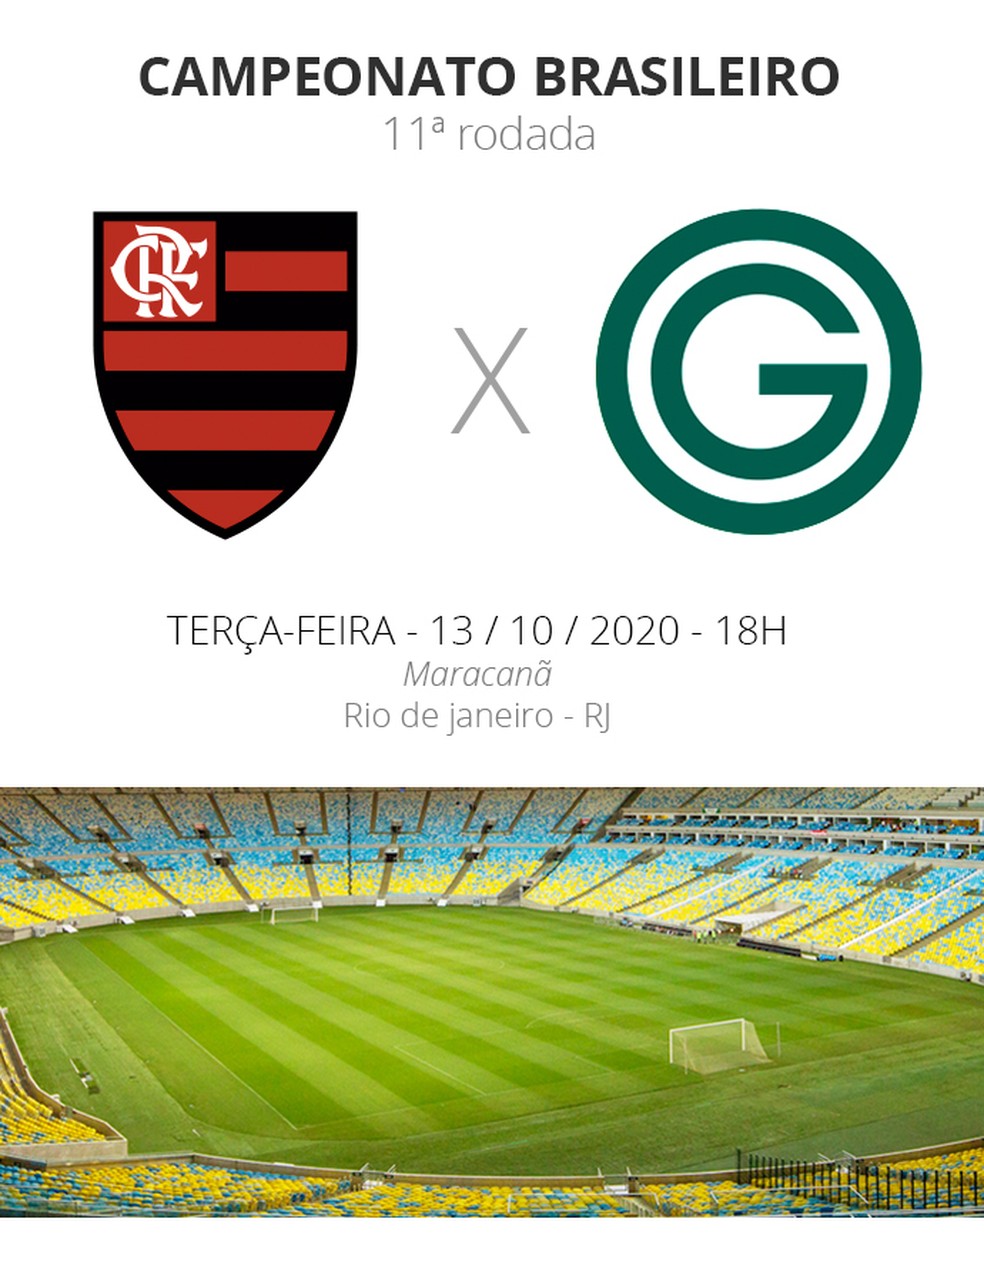 Assistir Flamengo x Goiás online - Futebol Bahiano